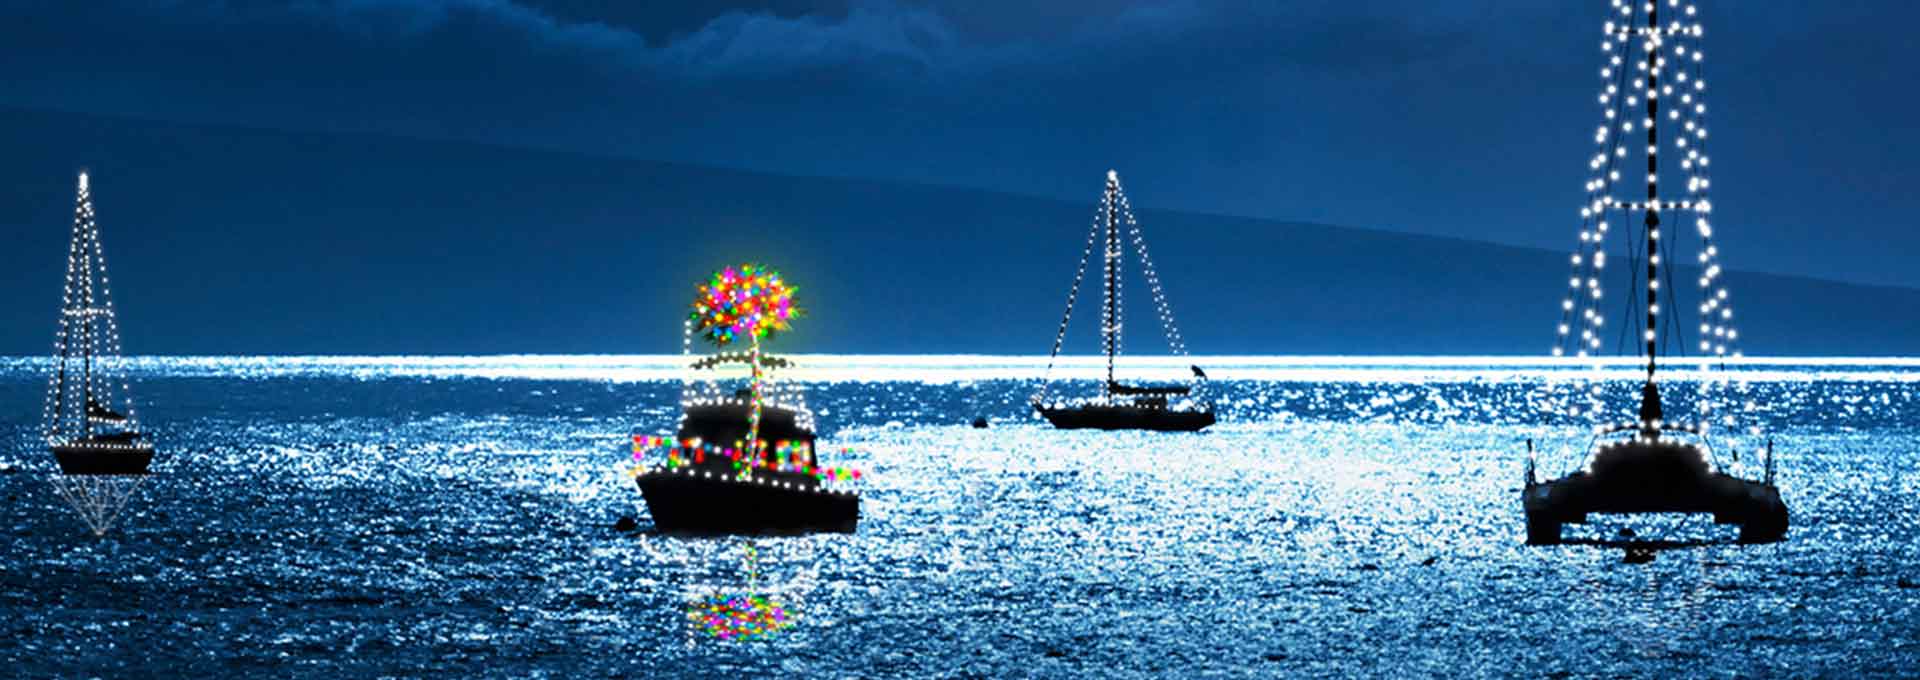 Boats with Christmas Lights